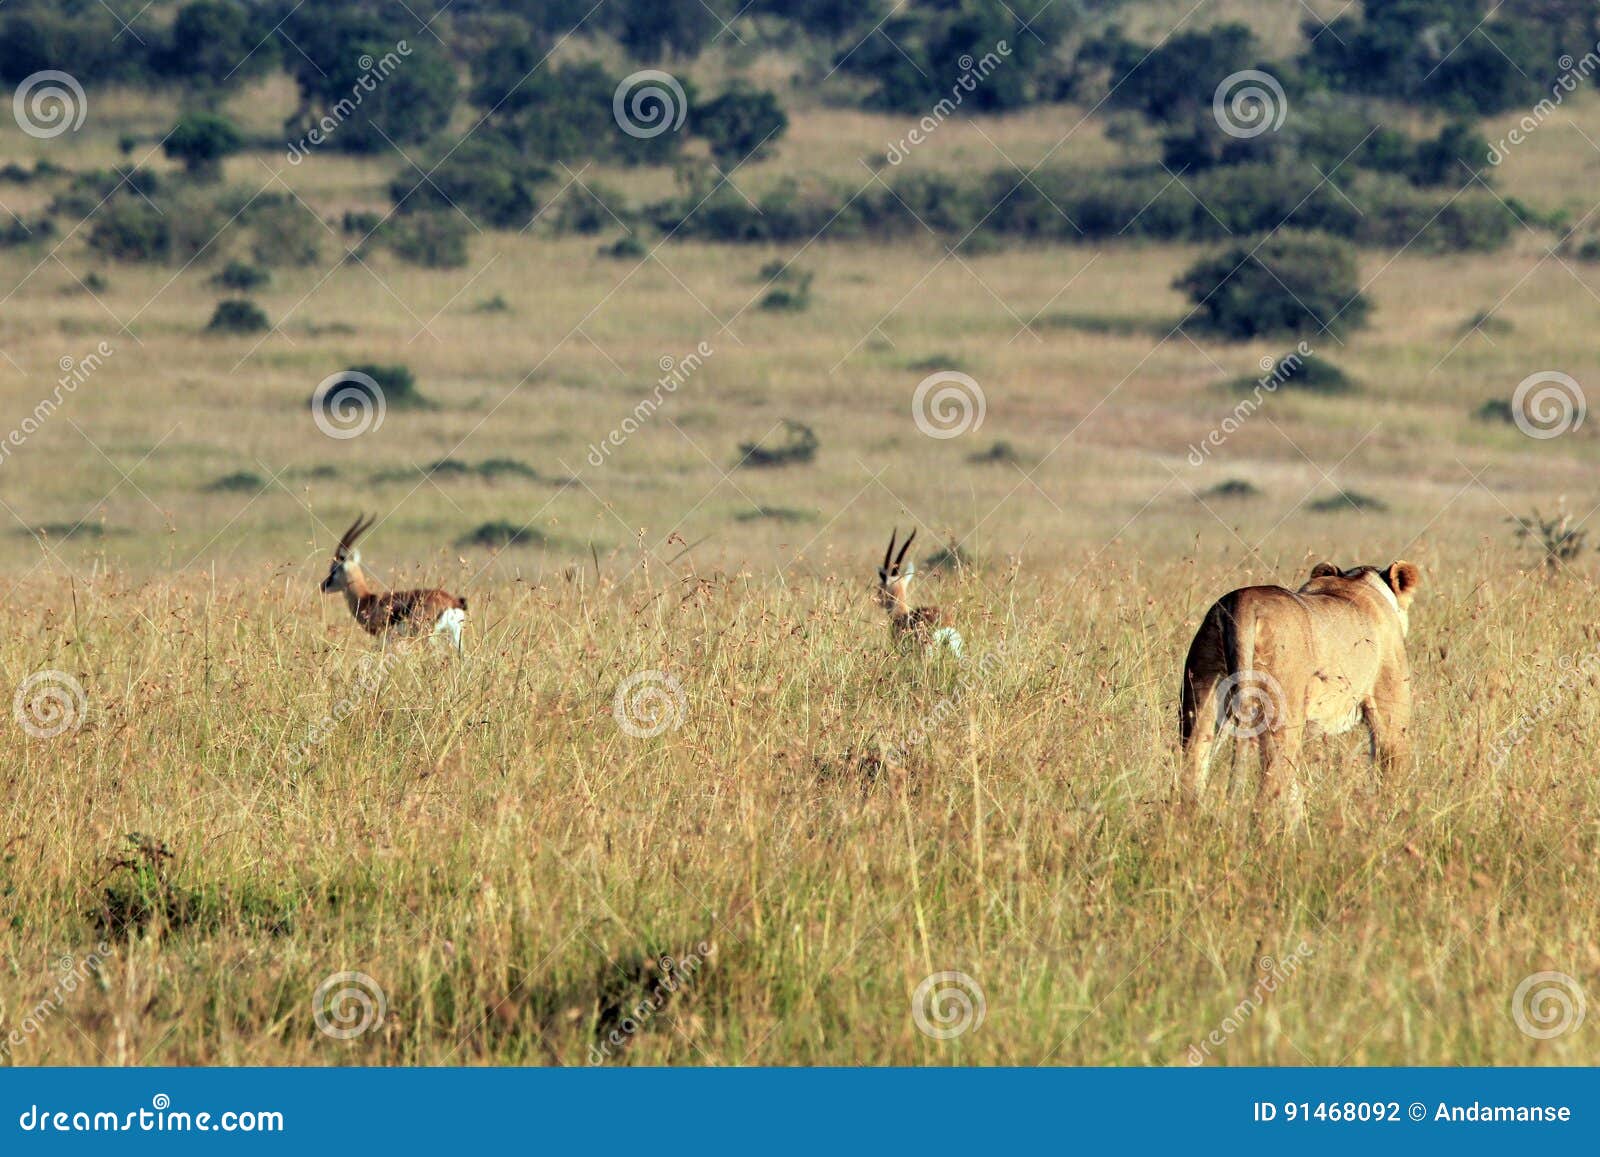 lion hunting gazelles